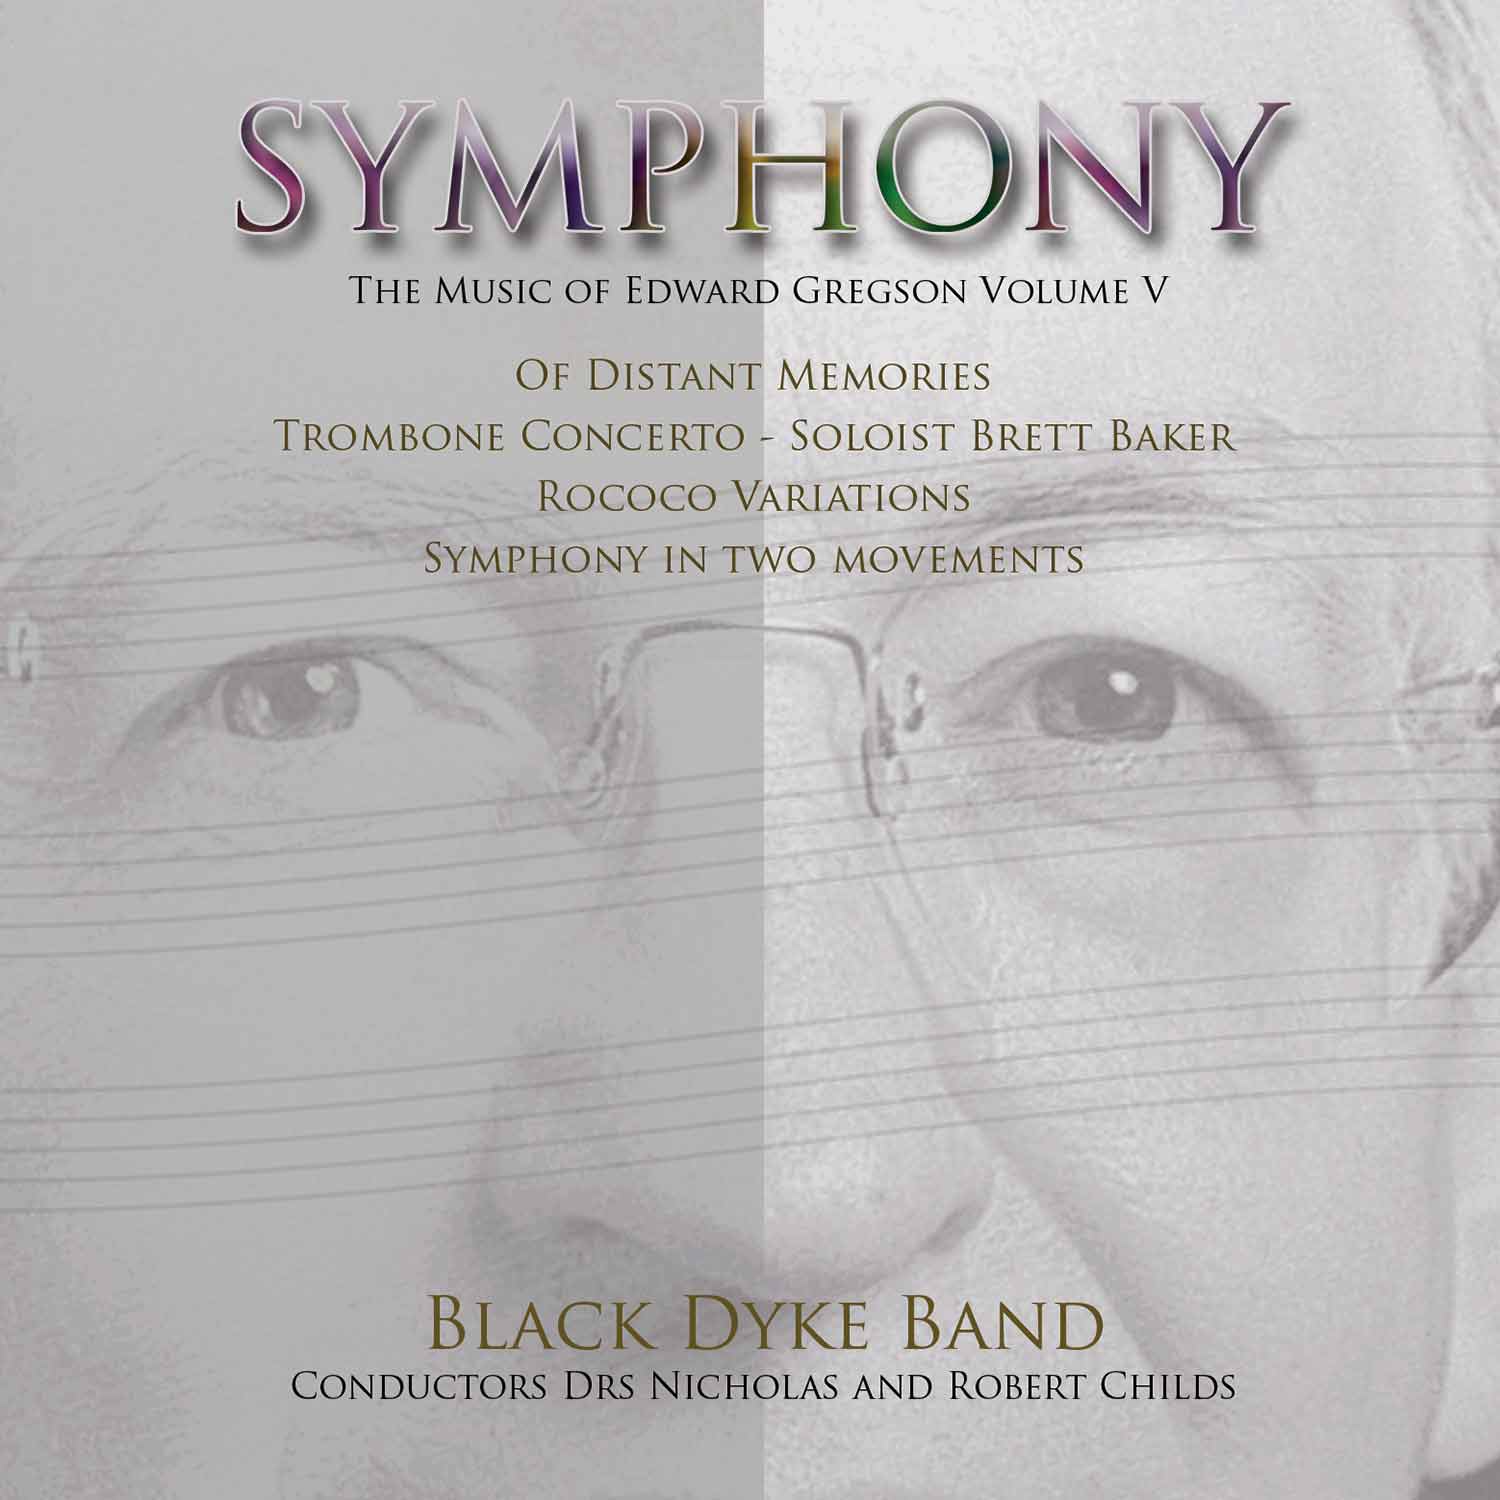 Symphony - The Music of Edward Gregson Vol. V - Download